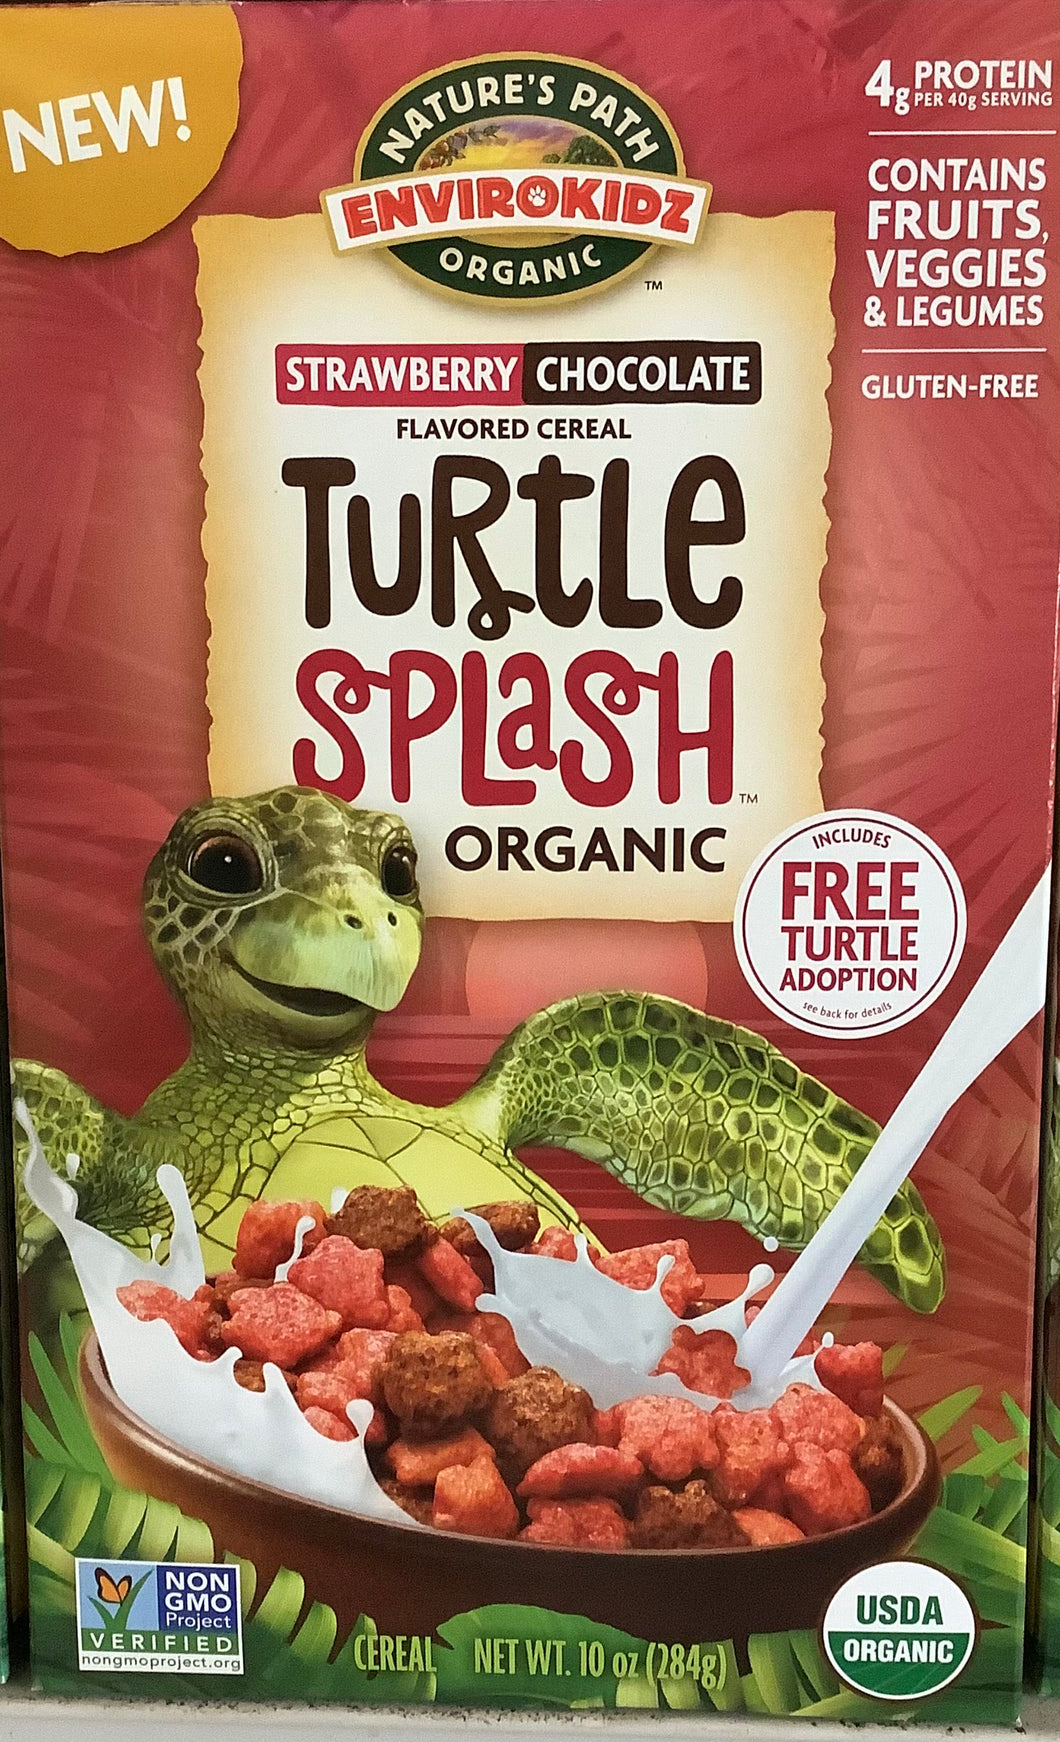 Cereal, Turtle Splash, Organic Gluten Free, Nature's Path Environkidz